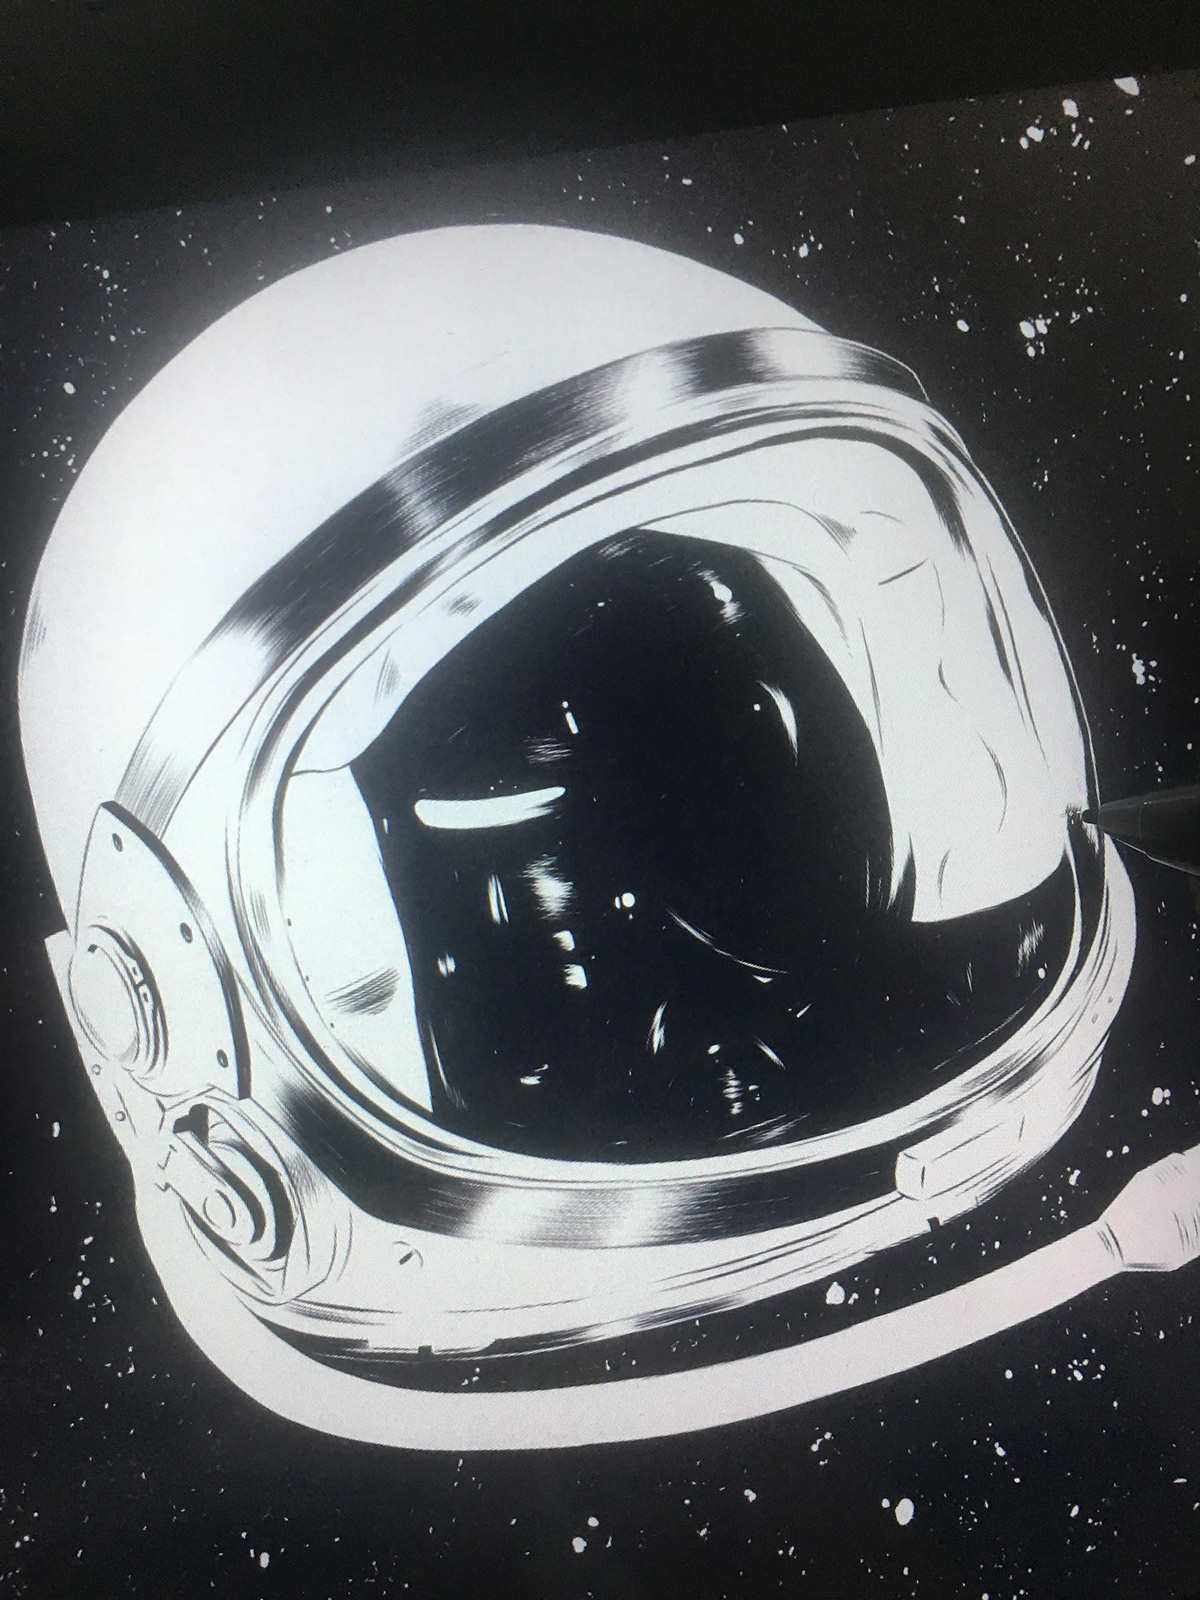 espacio Space  Helmet astronaut nasa stars universo universe casco espacial